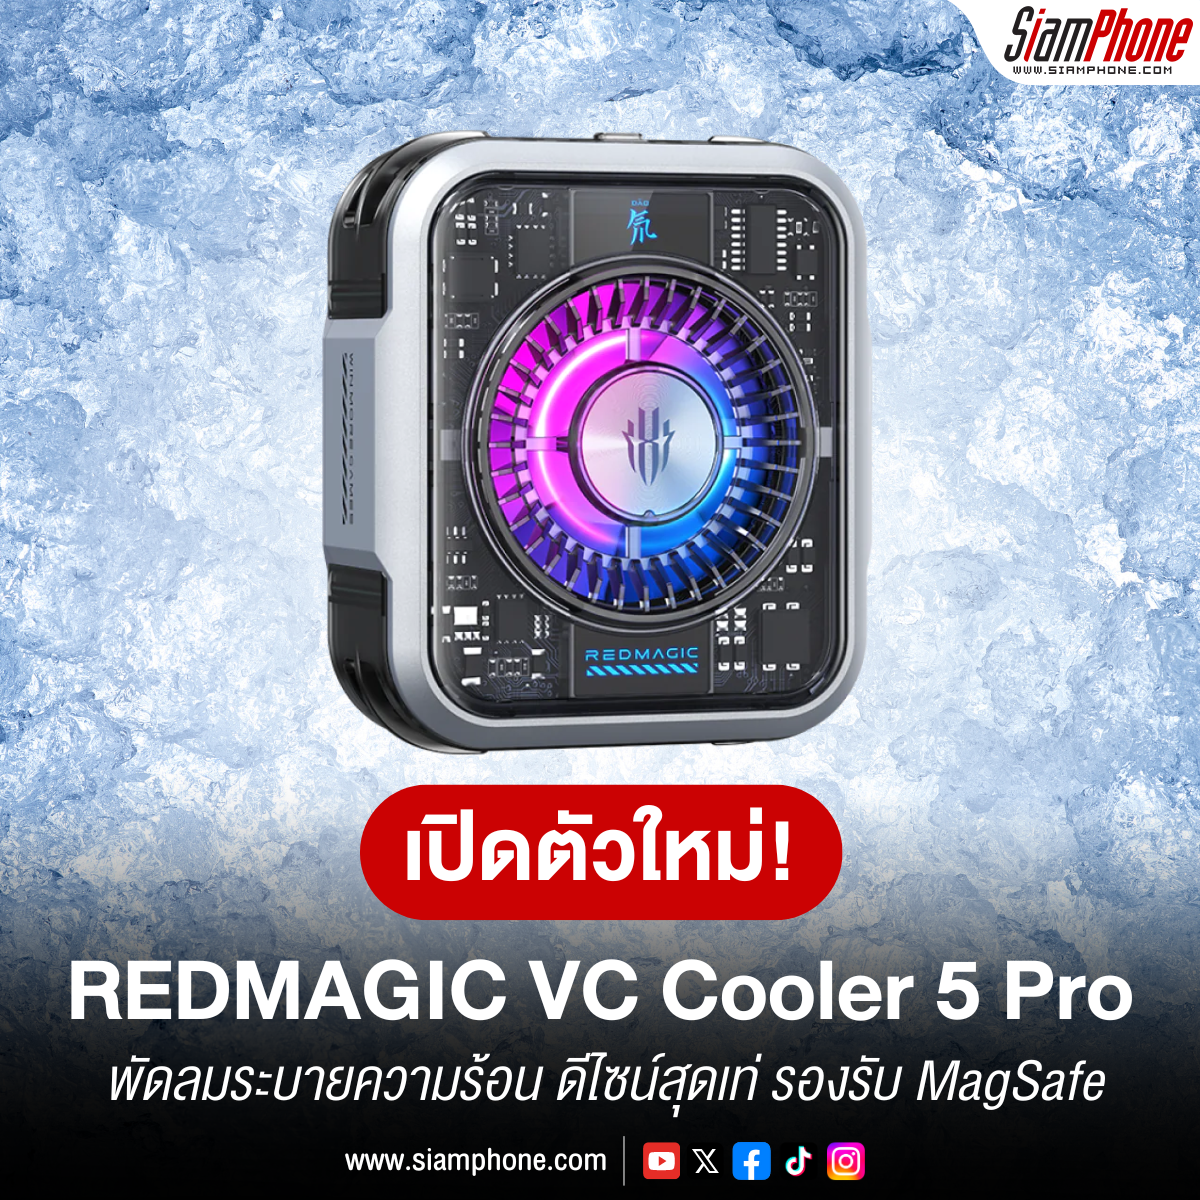 REDMAGIC เปิดตัวพัดลมระบายความร้อน REDMAGIC VC Cooler 5 Pro ดีไซน์สุดเท่ พร้อมรองรับ MagSafe